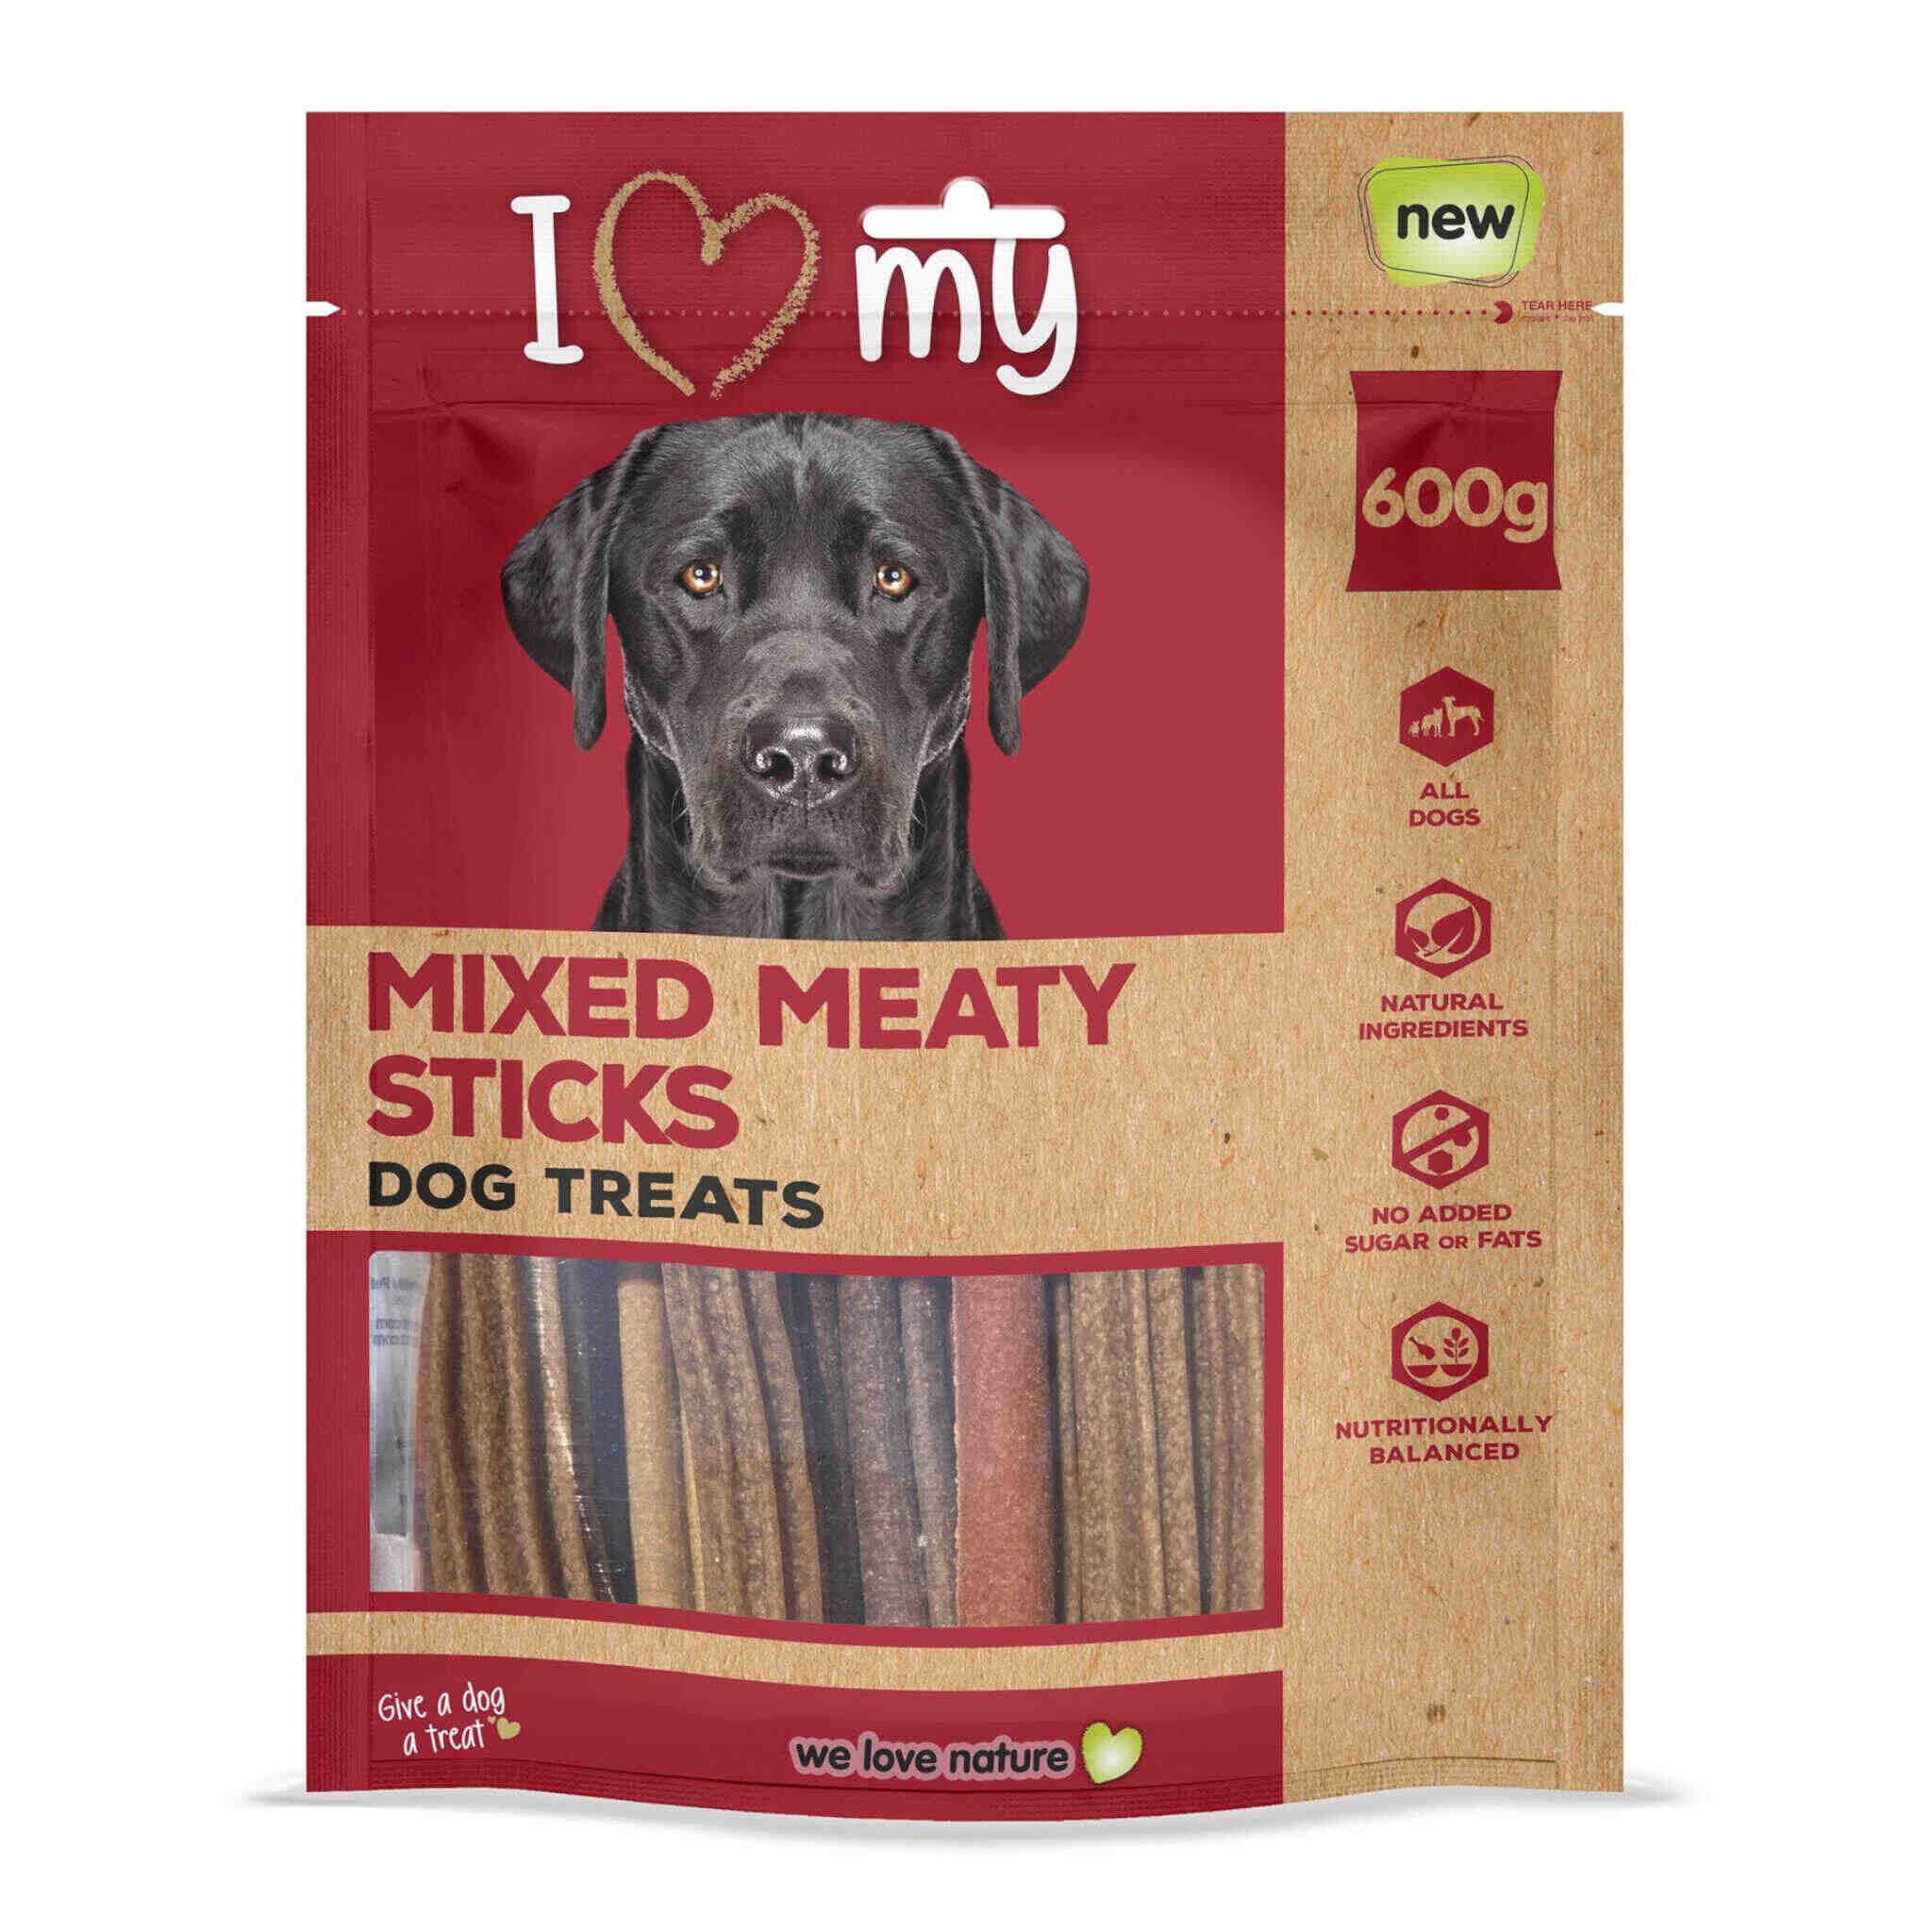 I Love My Pet Mixed Meaty Sticks Dog Treats 600g RRP £2.50 CLEARANCE XL £1.99